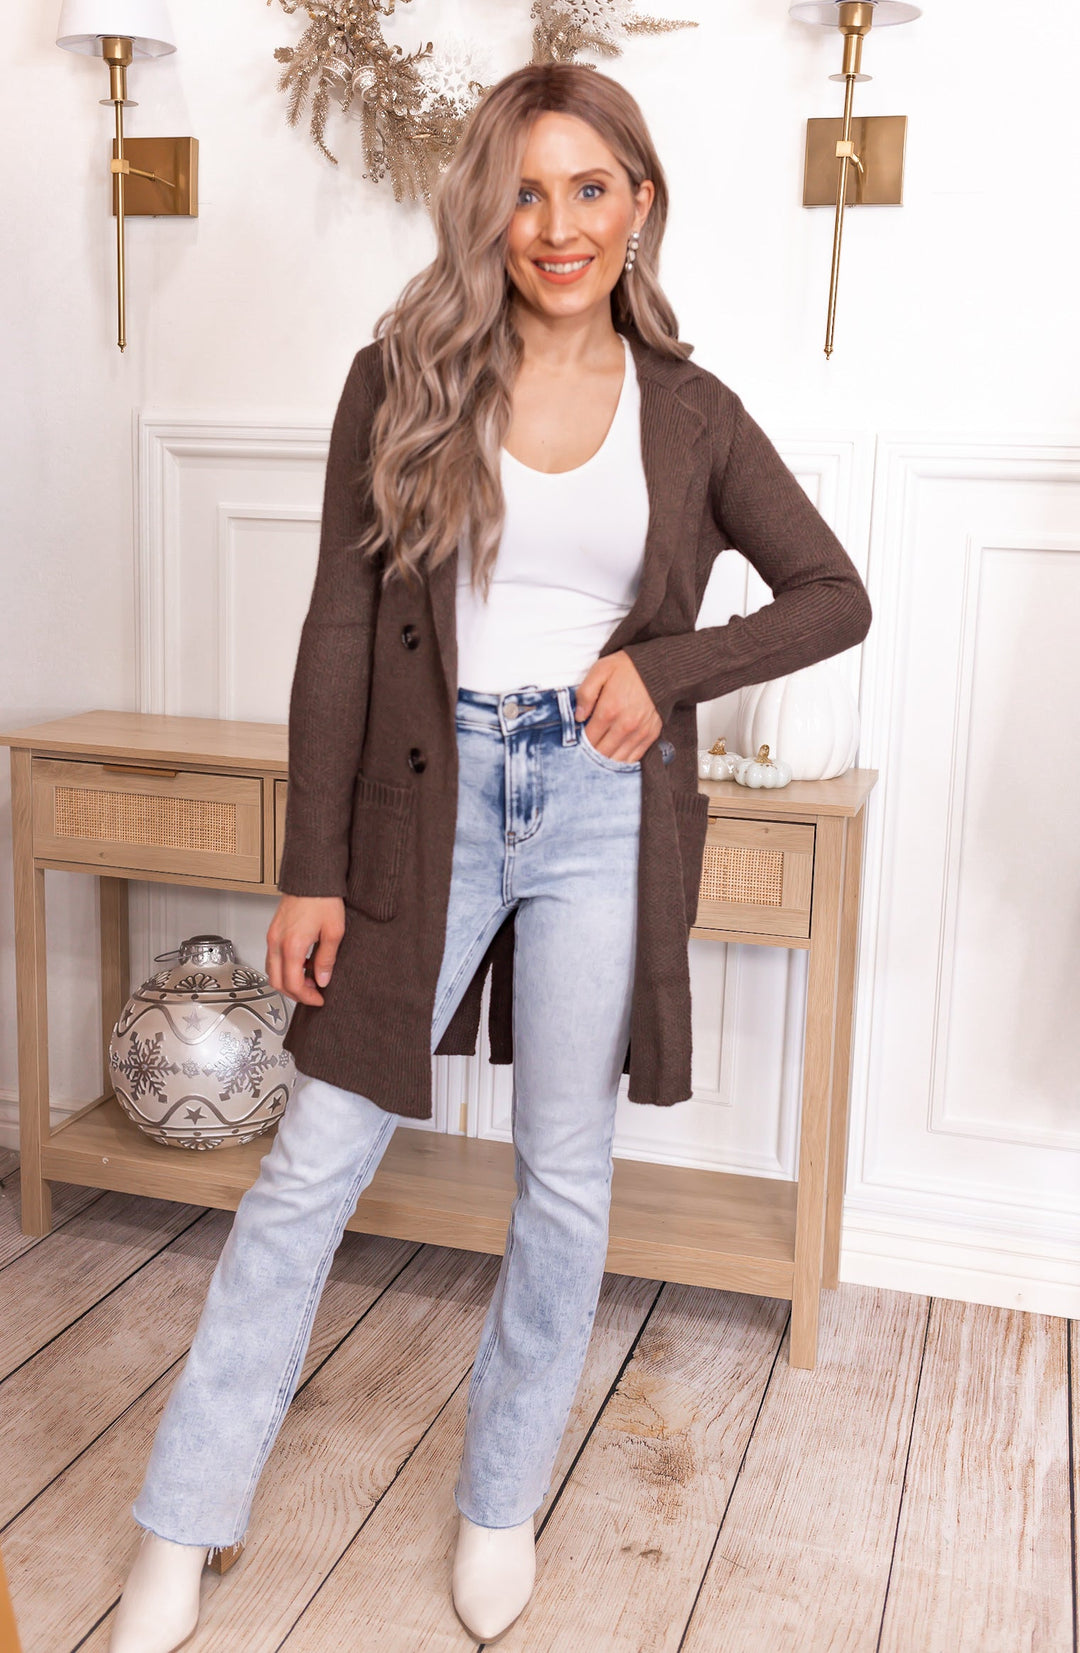 High Standards Notch Collar Sweater Jacket | S-2X-Cardigans-Krush Kandy, Women's Online Fashion Boutique Located in Phoenix, Arizona (Scottsdale Area)